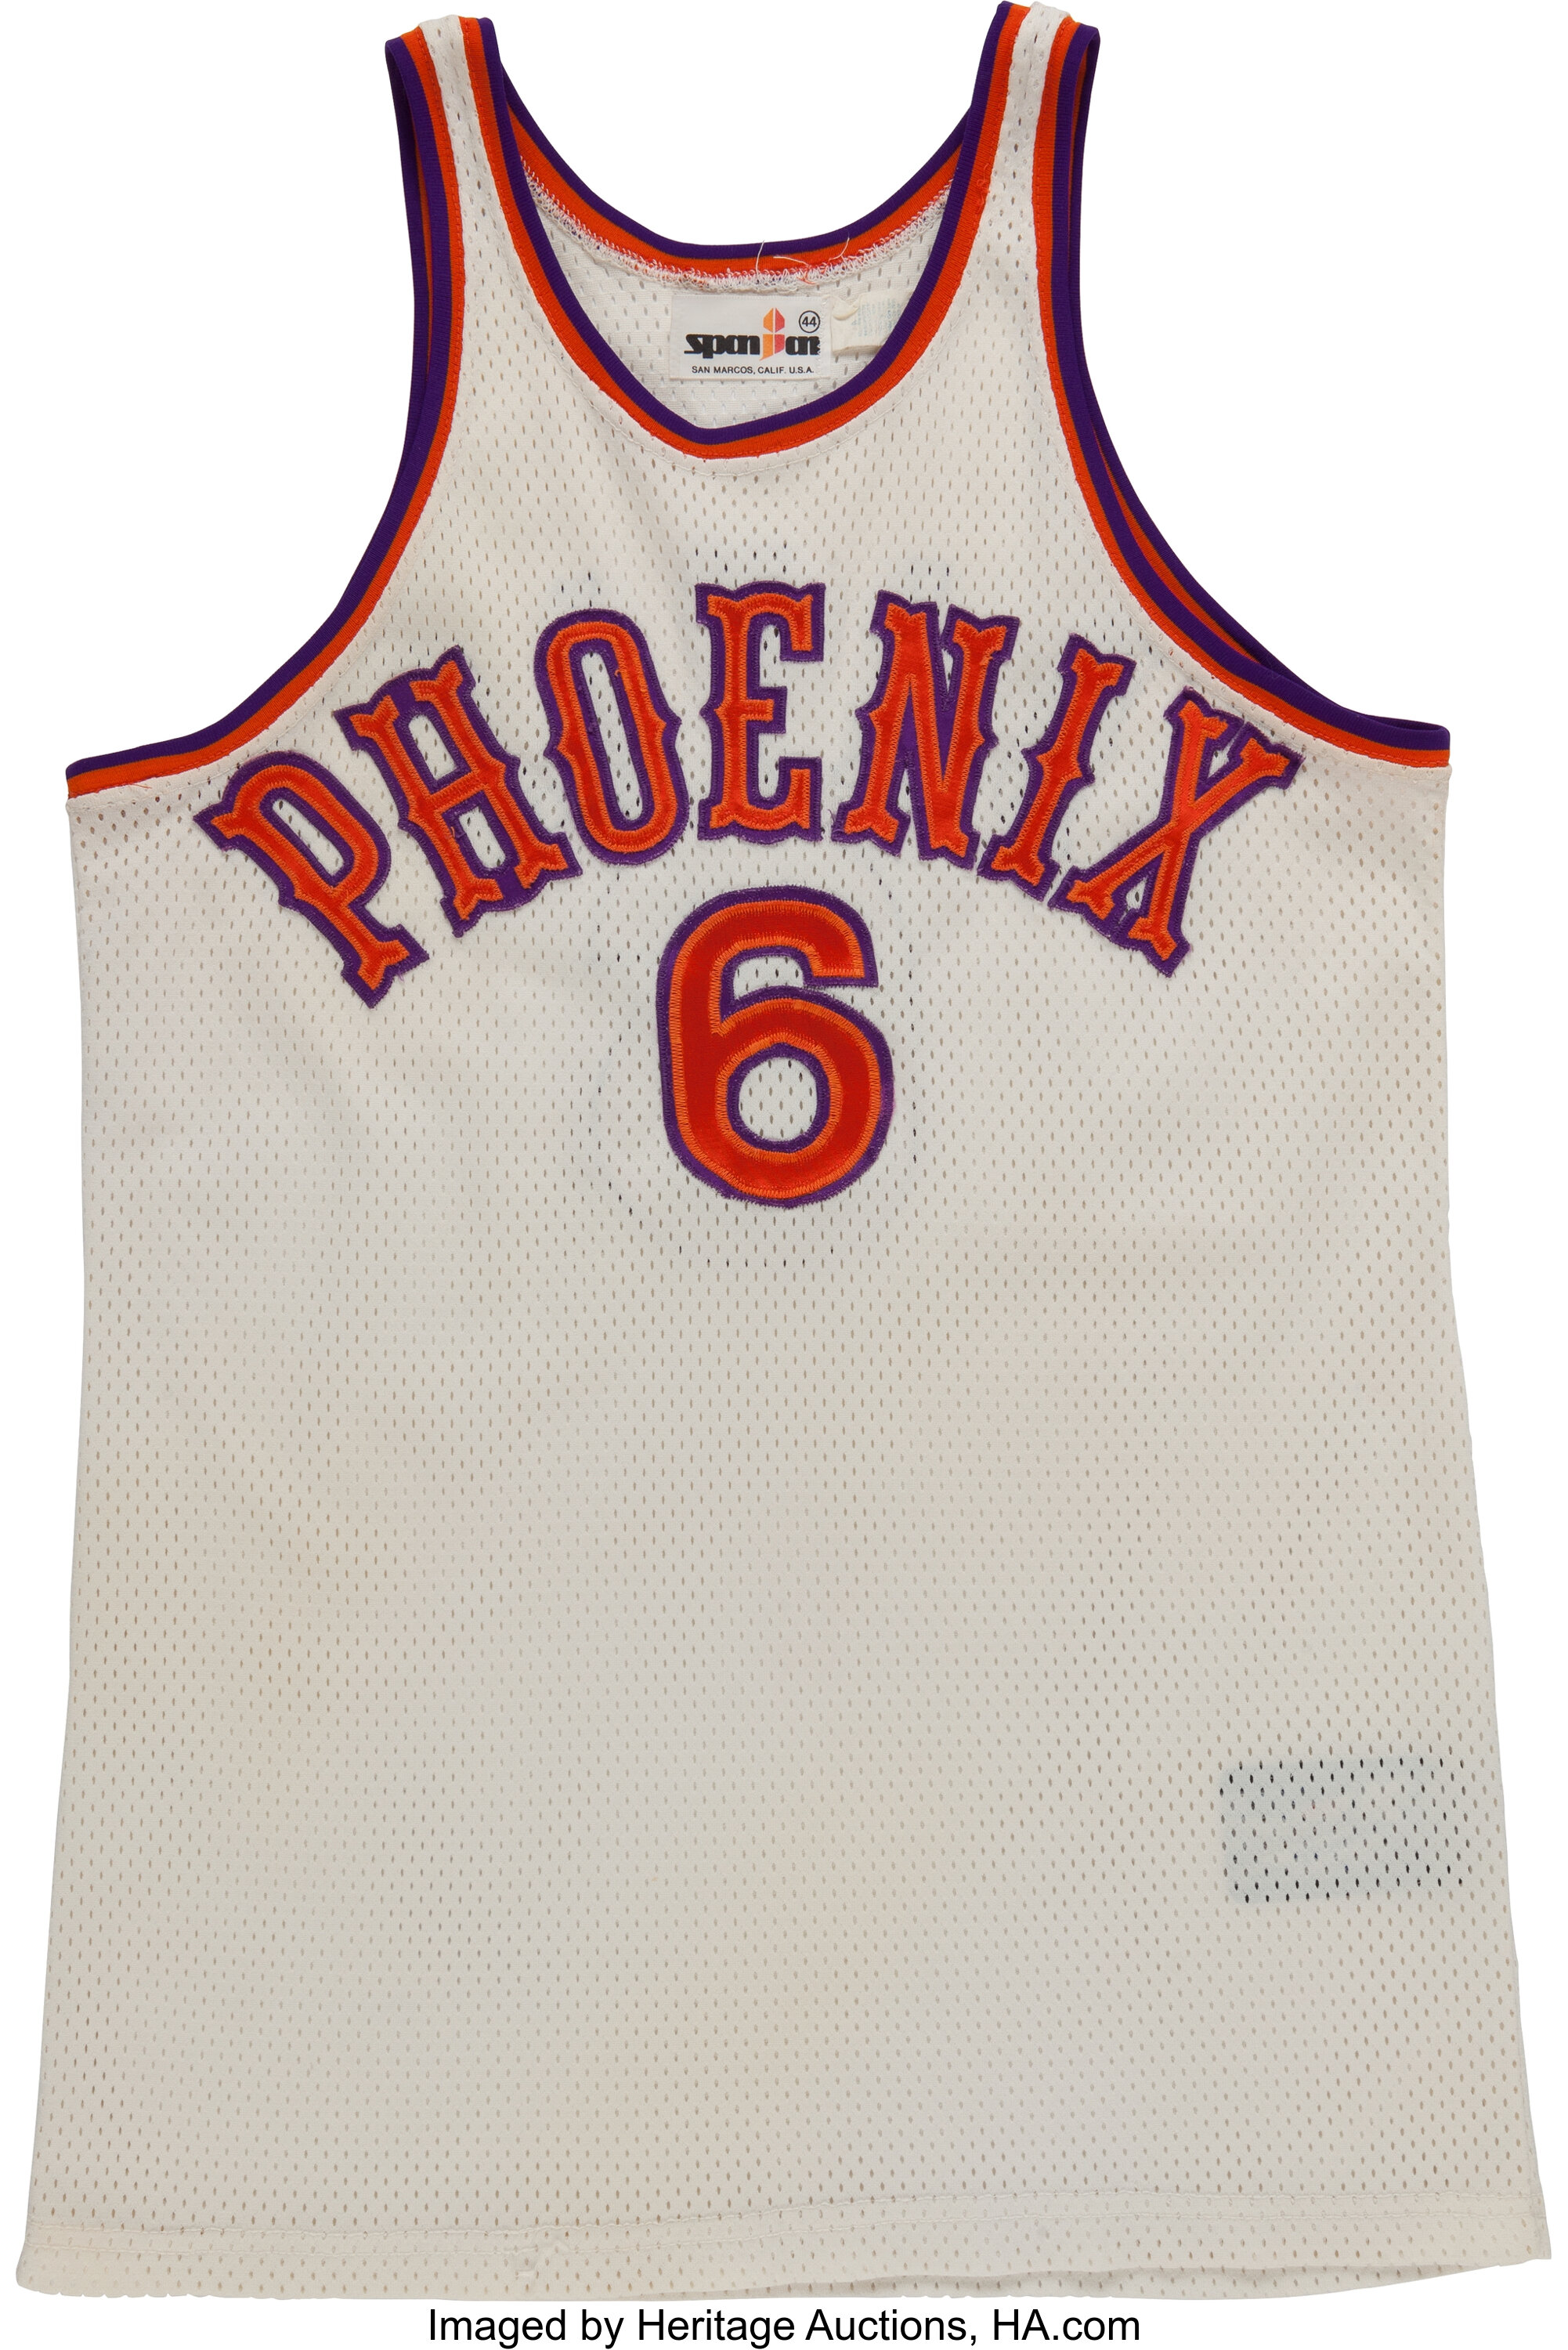 Phoenix Suns Jersey History - Basketball Jersey Archive